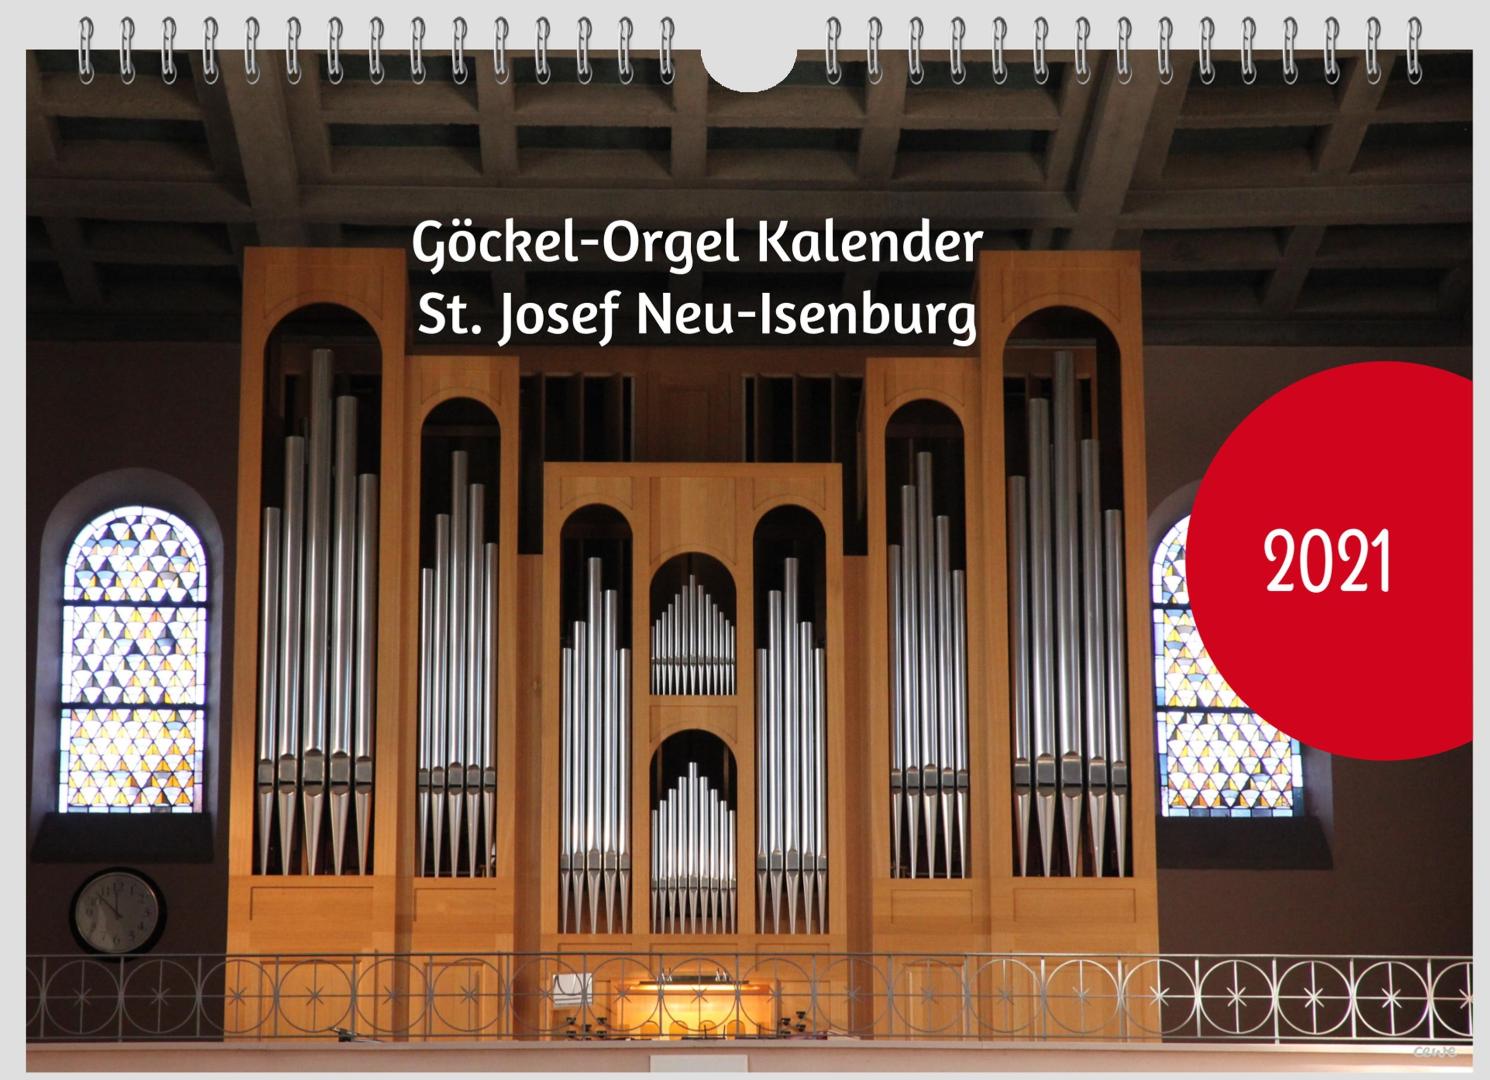 Göckel Orgelkalender 2021 (c) D. Thiel